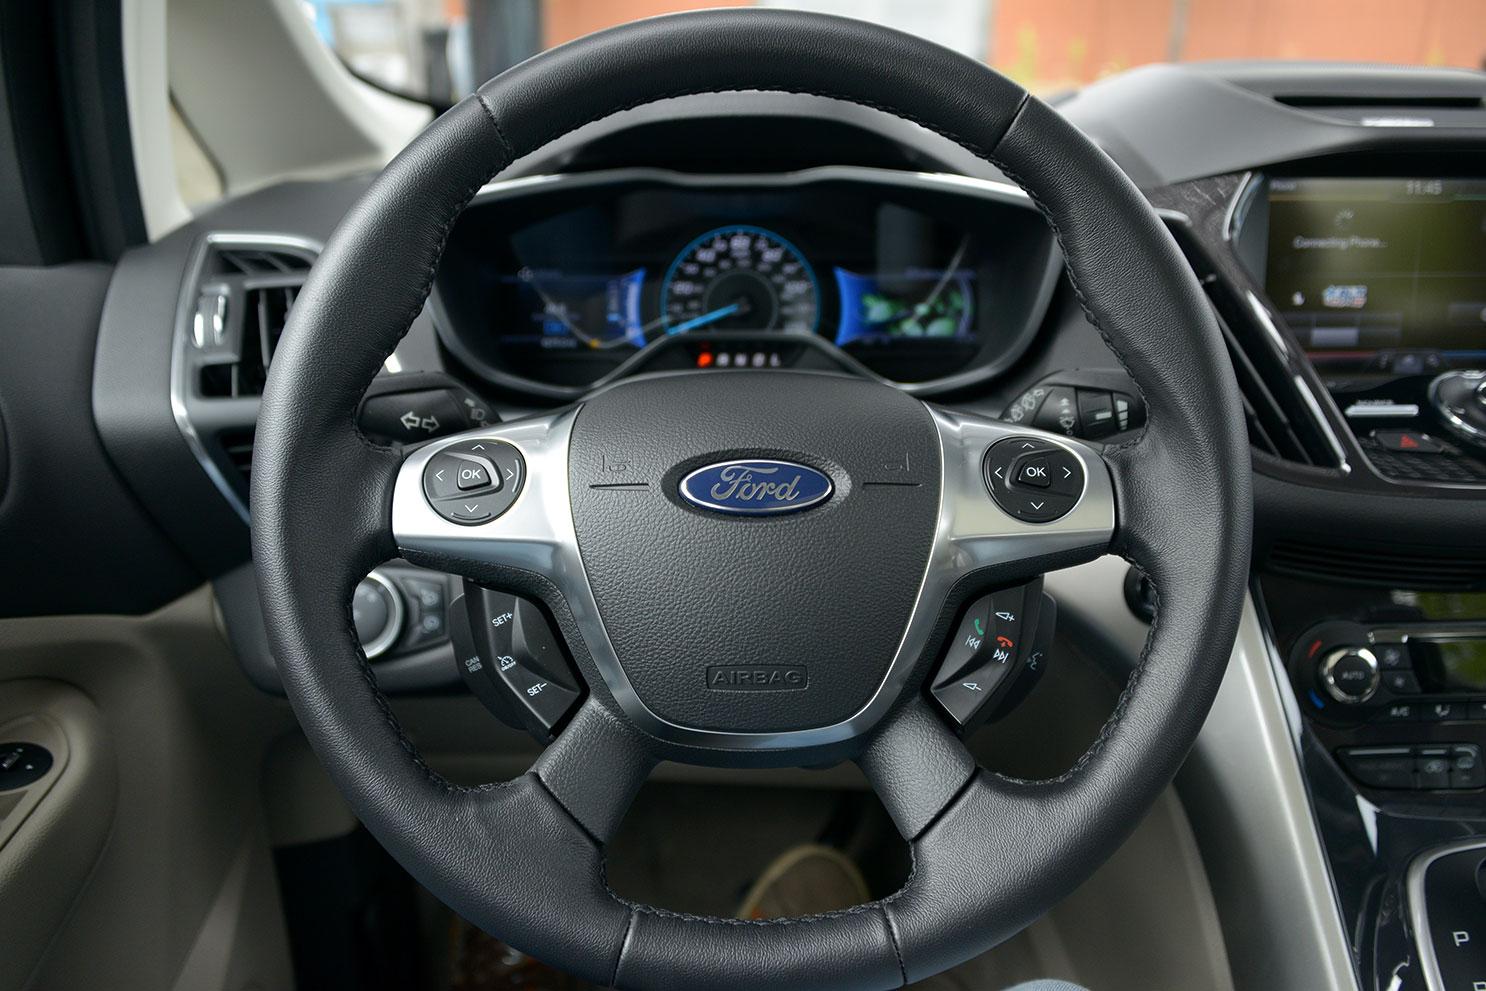 2015 Ford C-MAX Energi review | Digital Trends